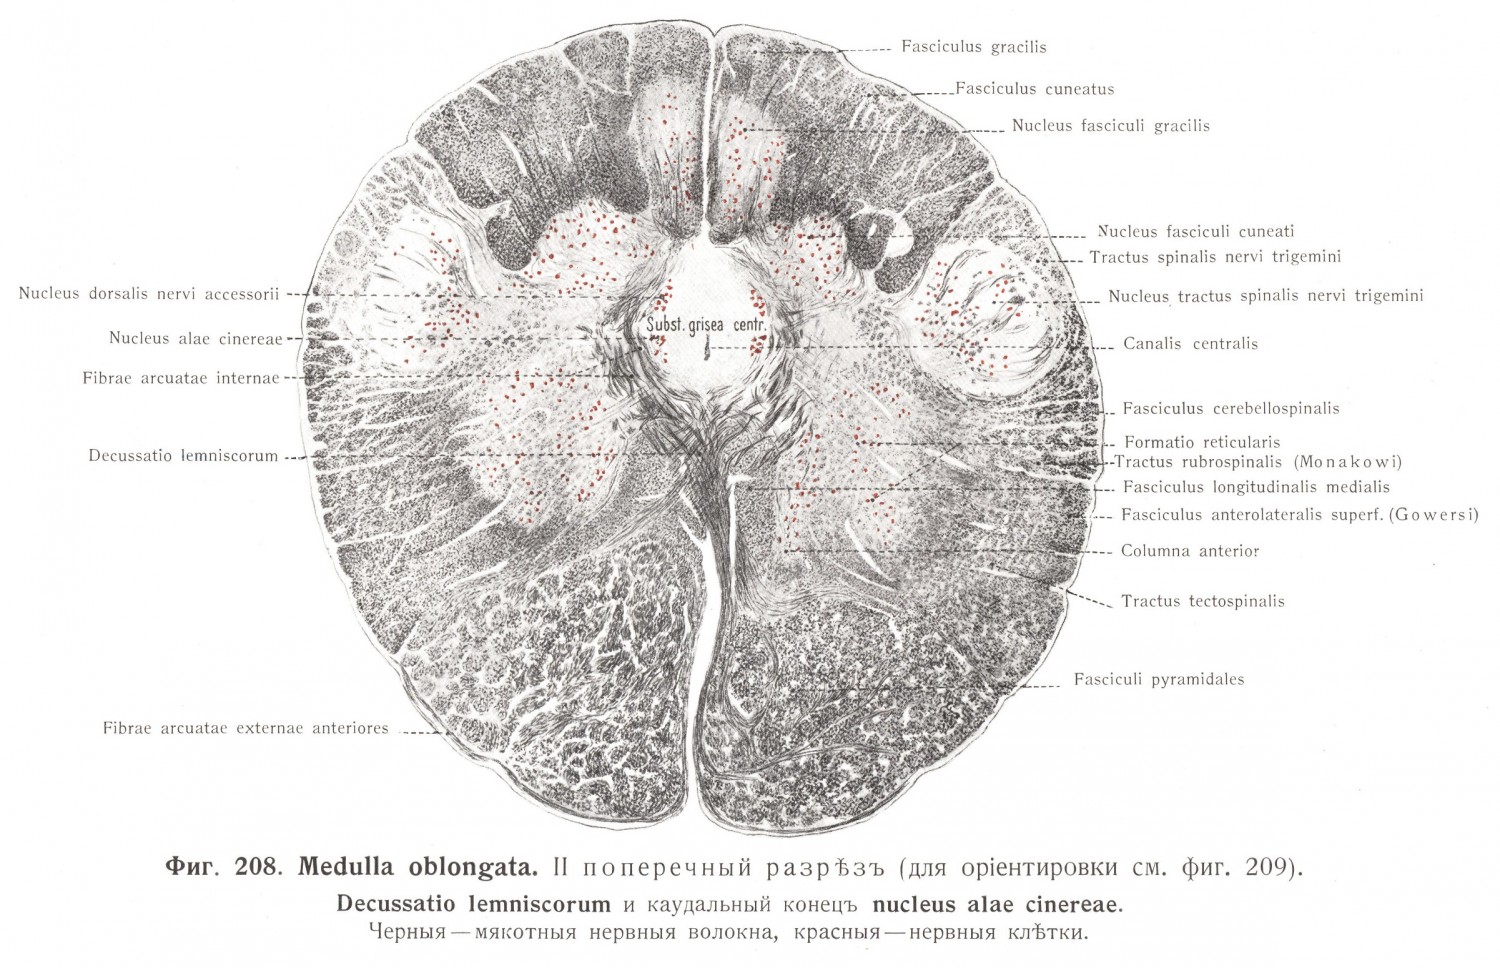 Medulla oblongata, II поперечный разрез